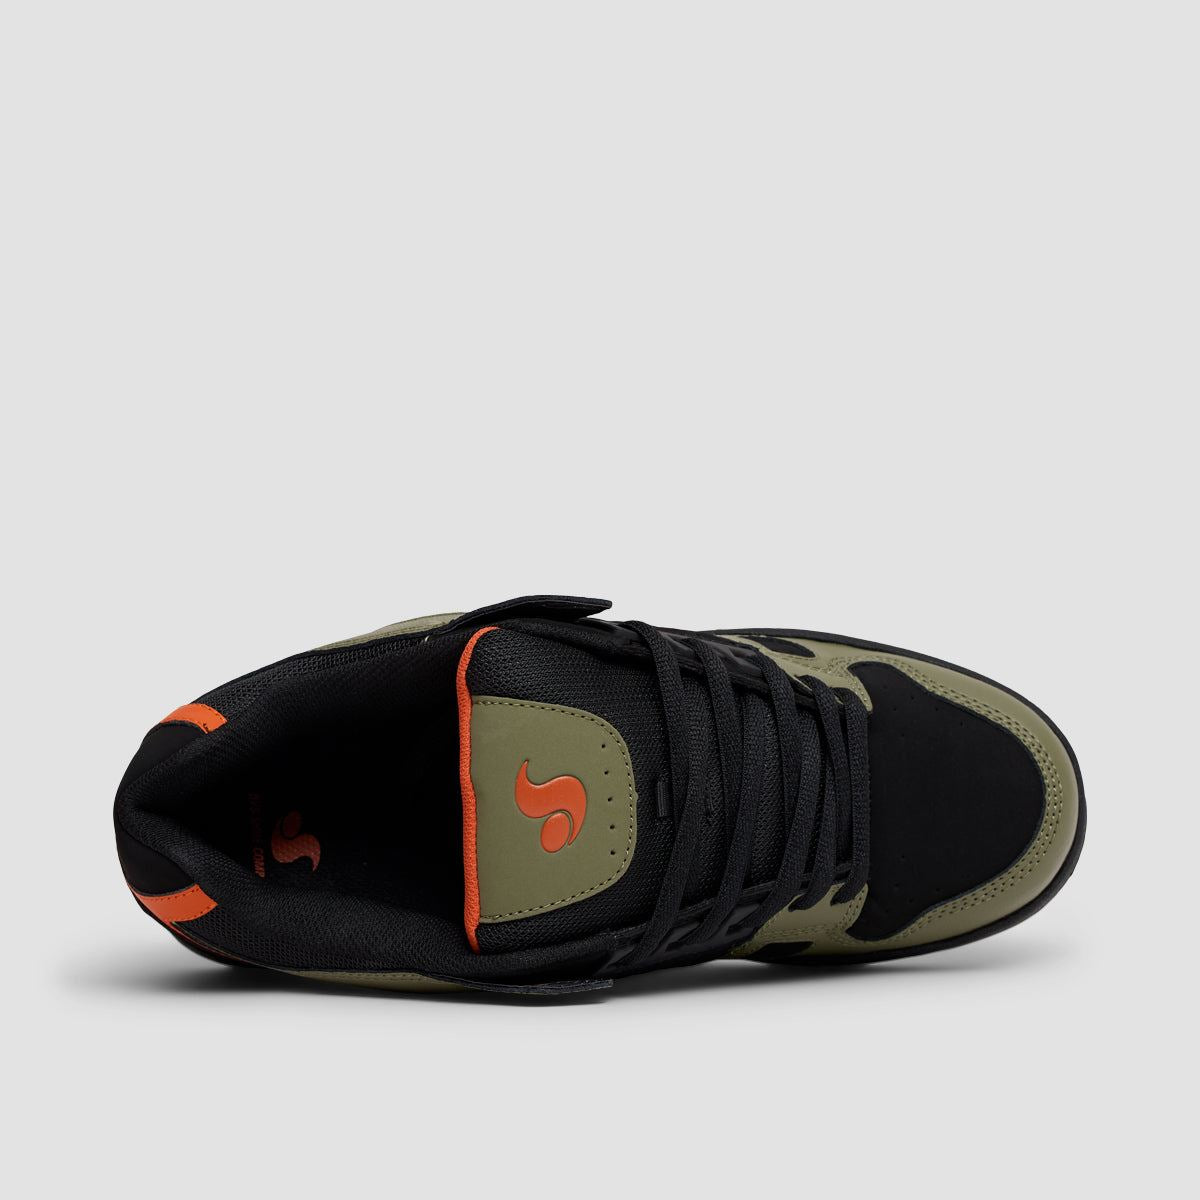 DVS Celsius Shoes - Black/Olive/Orange Nubuck